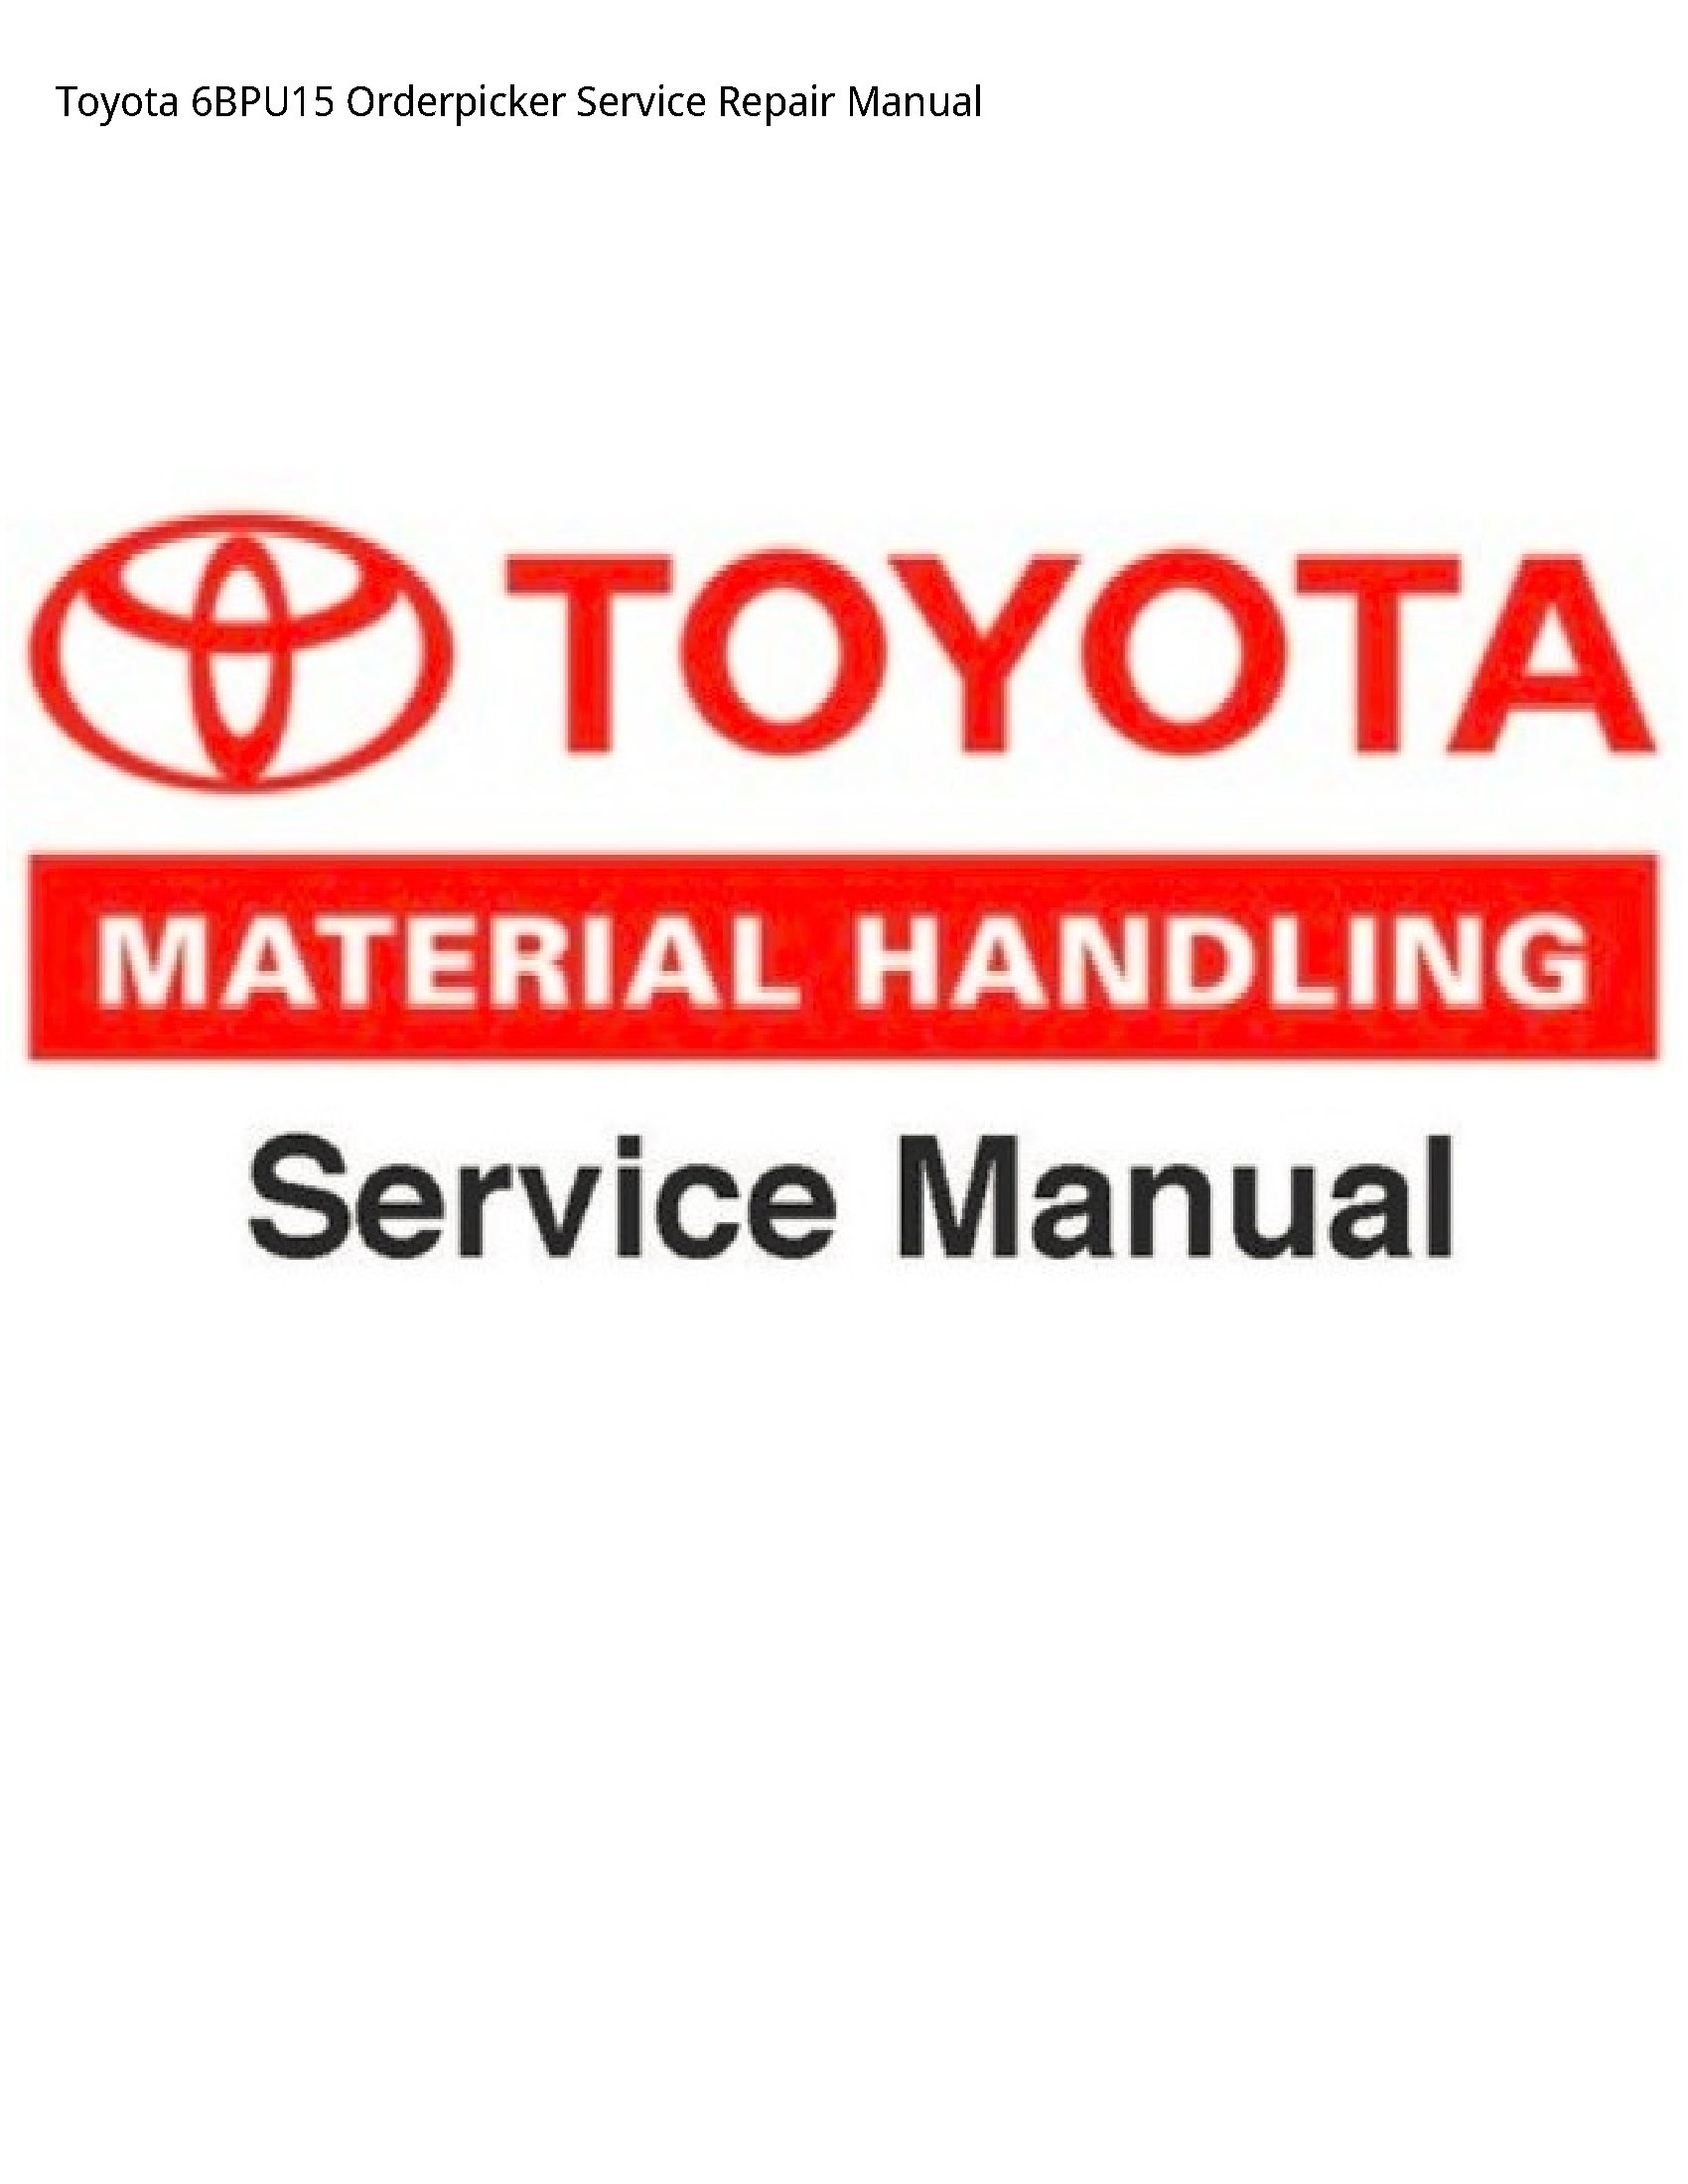 Toyota 6BPU15 Orderpicker manual